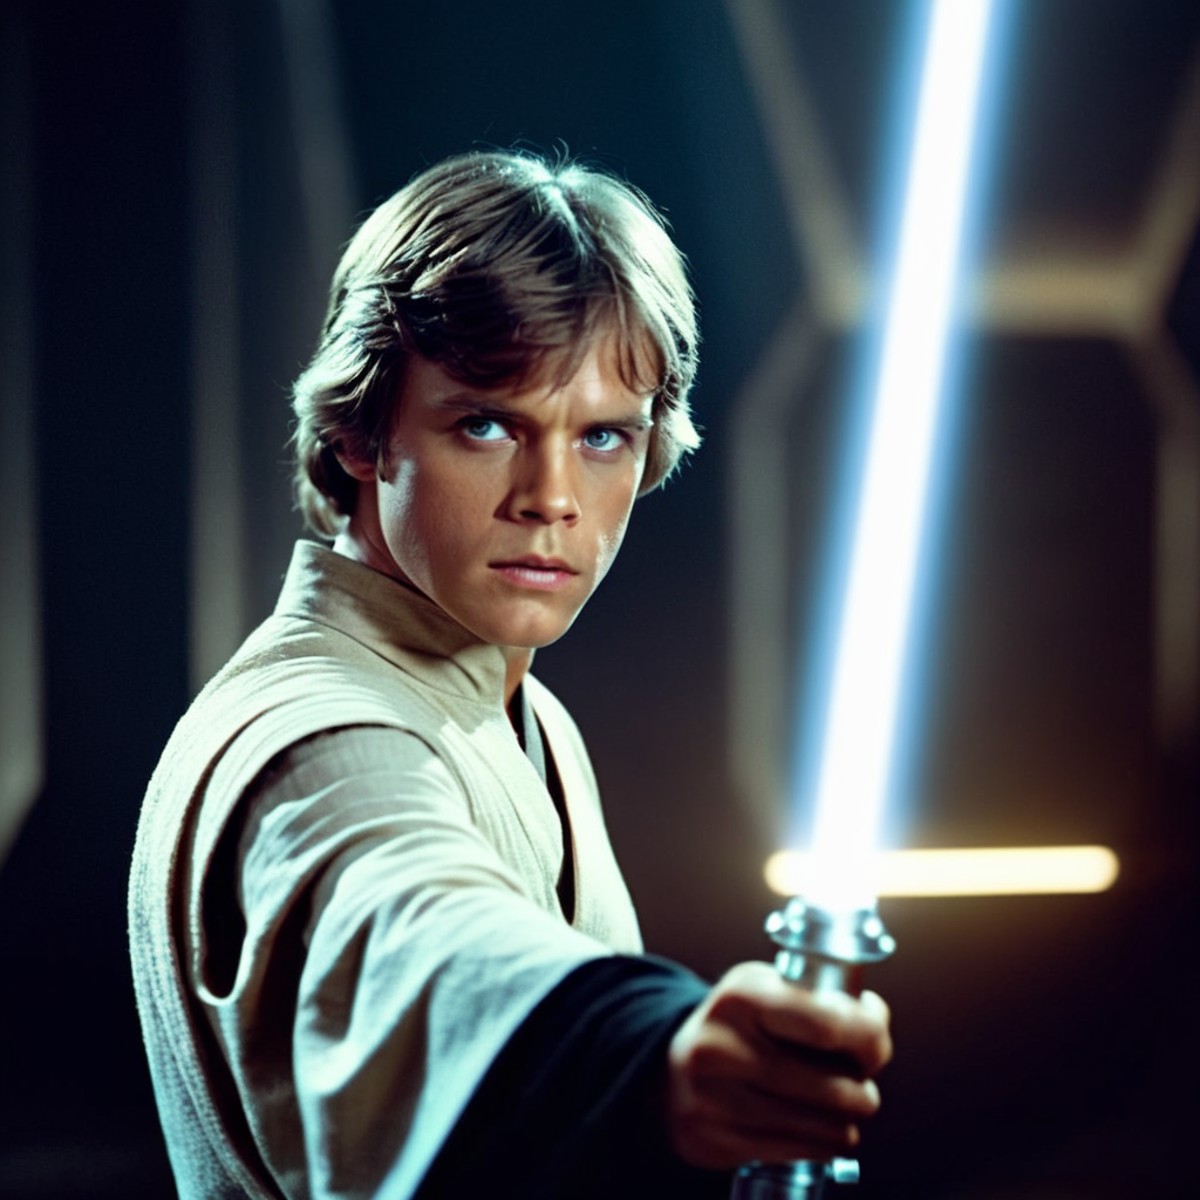 cinematic film still of  <lora:Luke Skywalker:1.2>
Luke Skywalker a young man holding a light saber in a room in star wars...